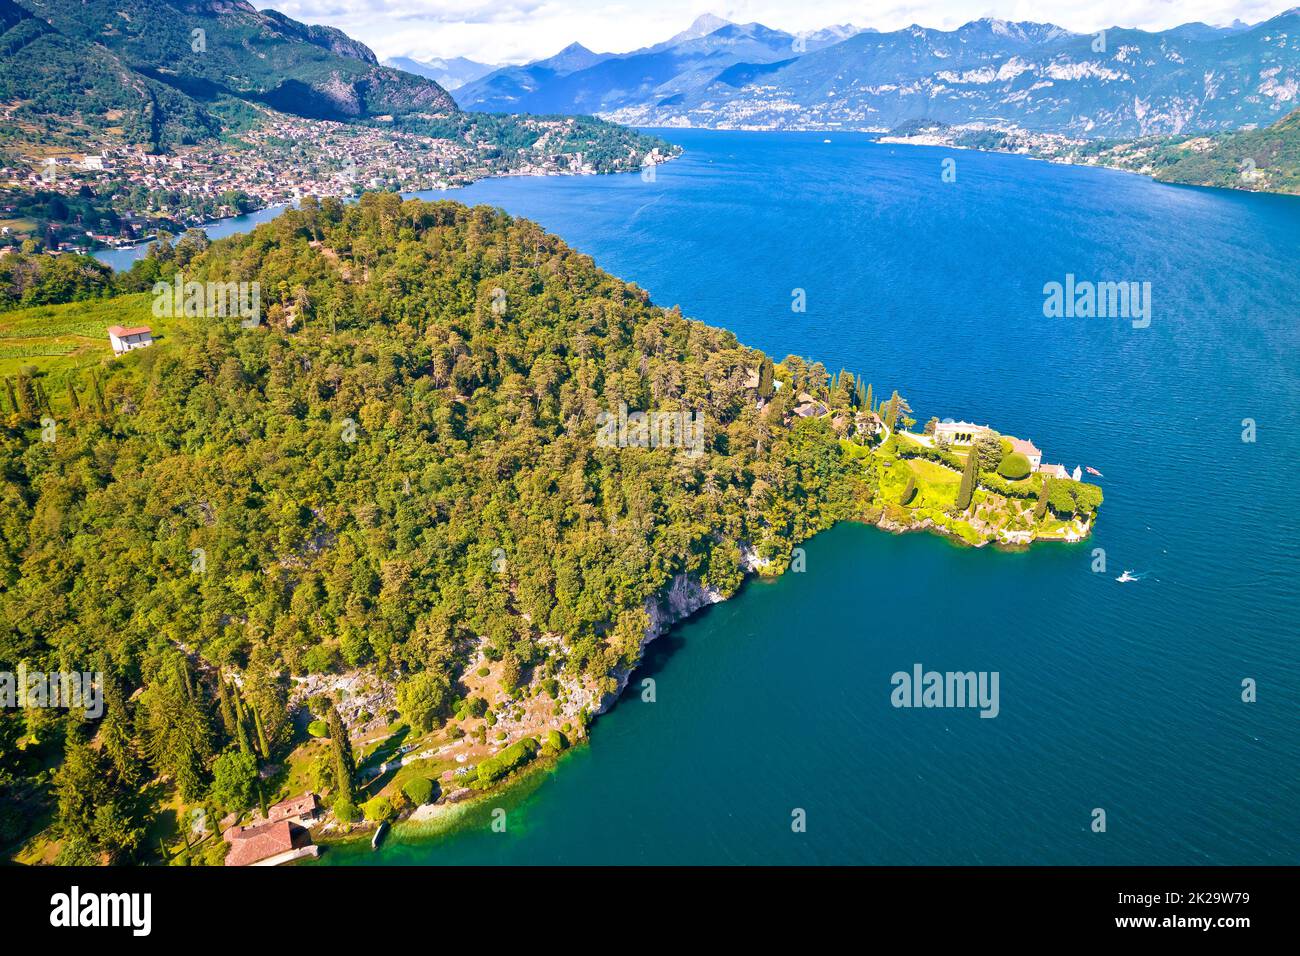 Villa Balbianello and Lake Como aerial view, Town of Lenno Stock Photo